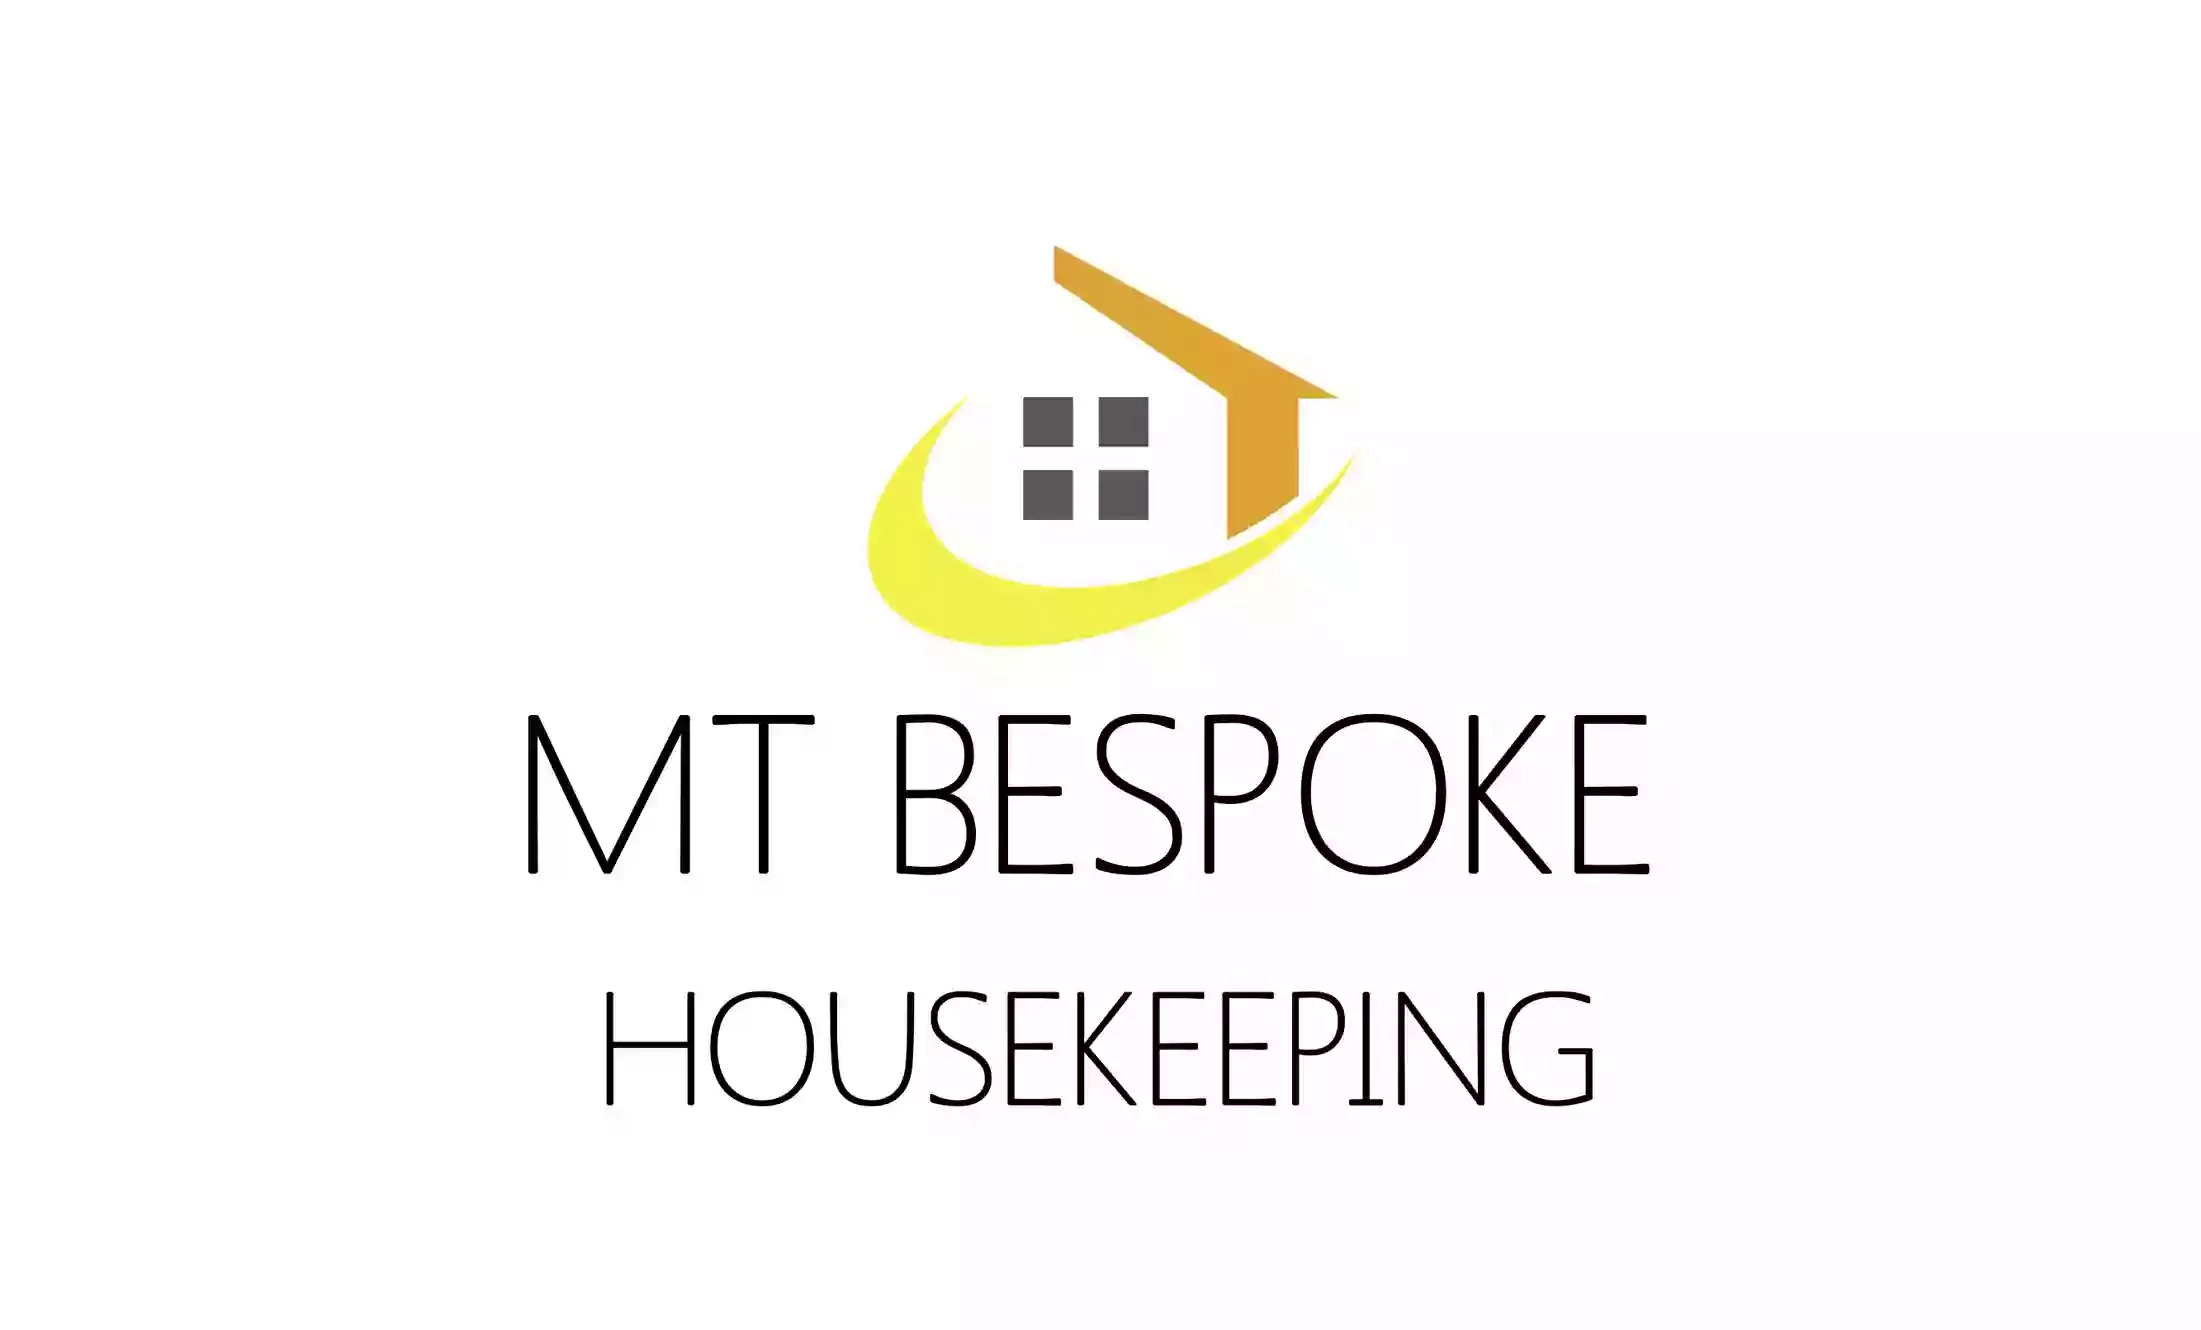 MT Bespoke Housekeeping & Services